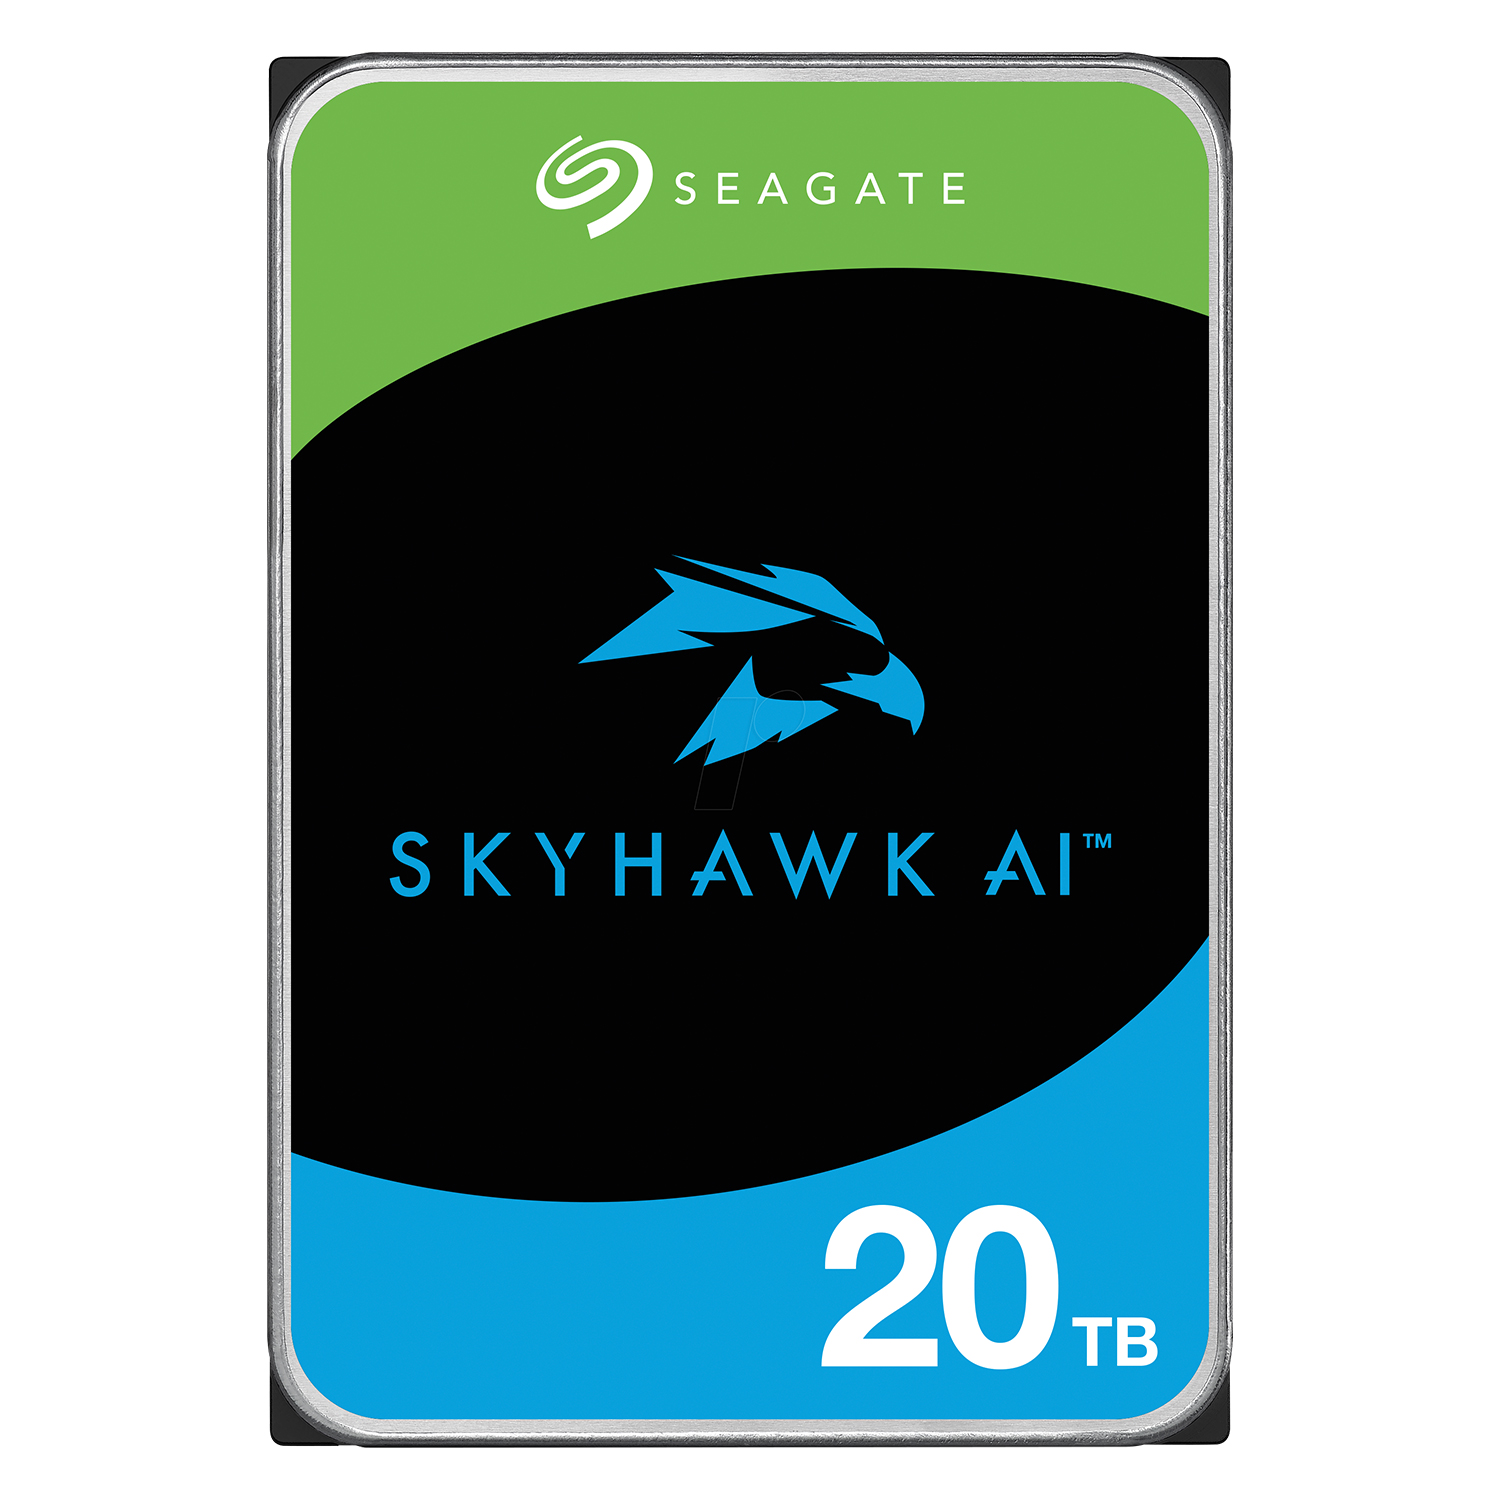 HD Seagate Skyhawk Al Surveillance 20TB / Sata 3 - (ST20000VE002)